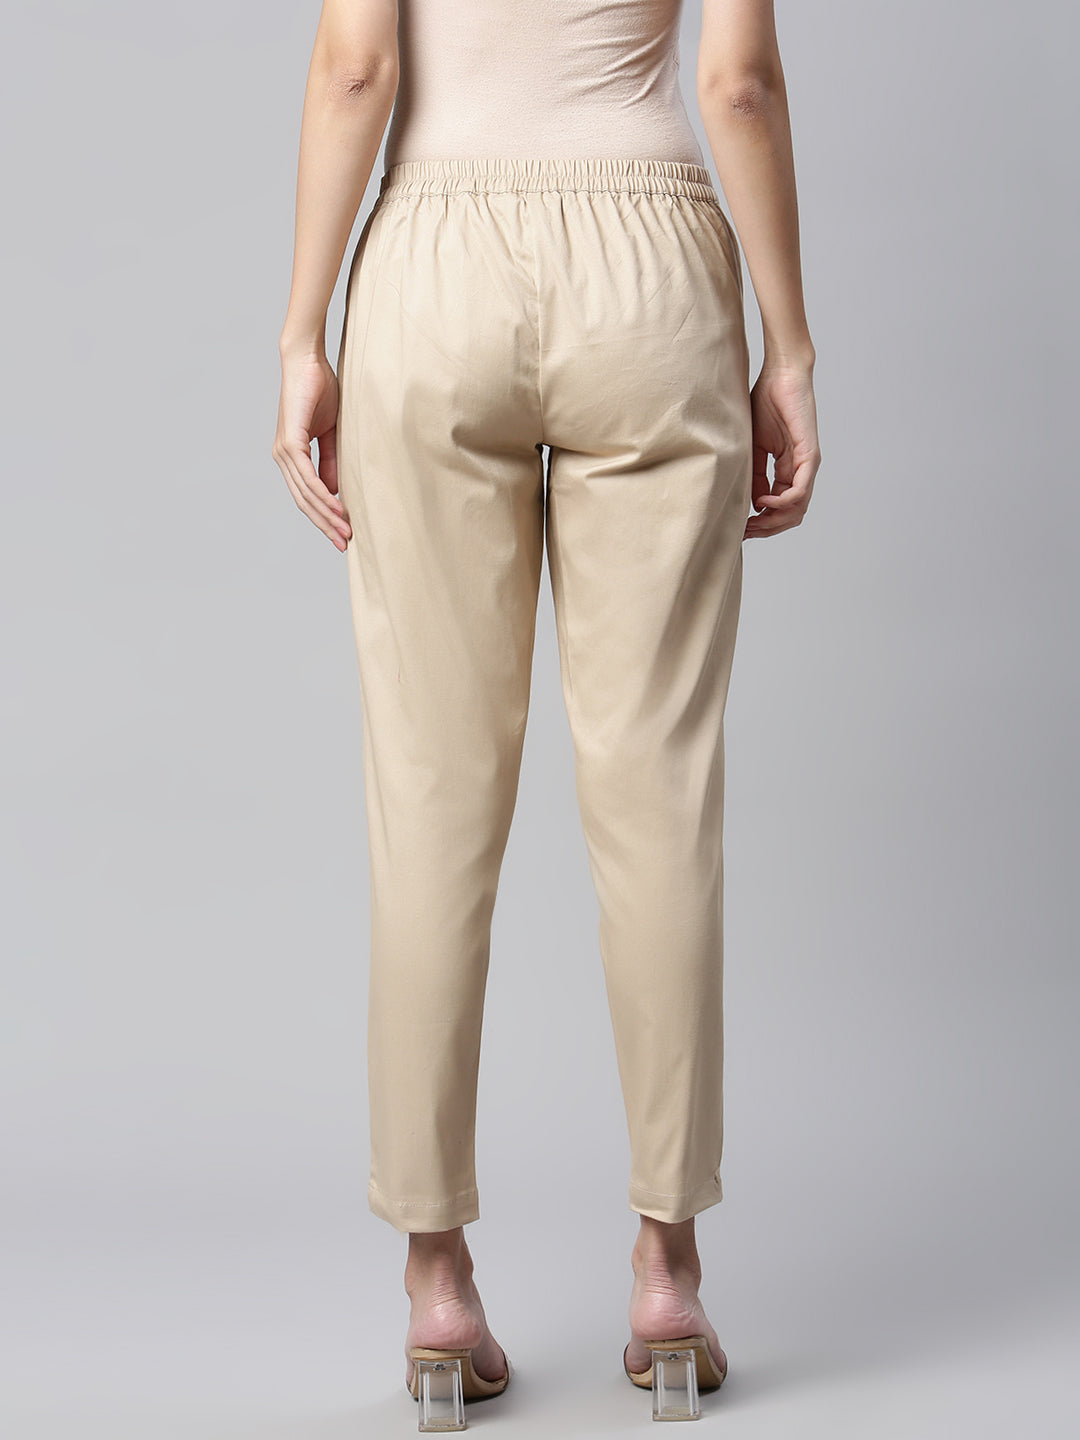 SLAY. Women's Beige Pants -SLAY. Blazer Pant Coord Set free shipping  discount